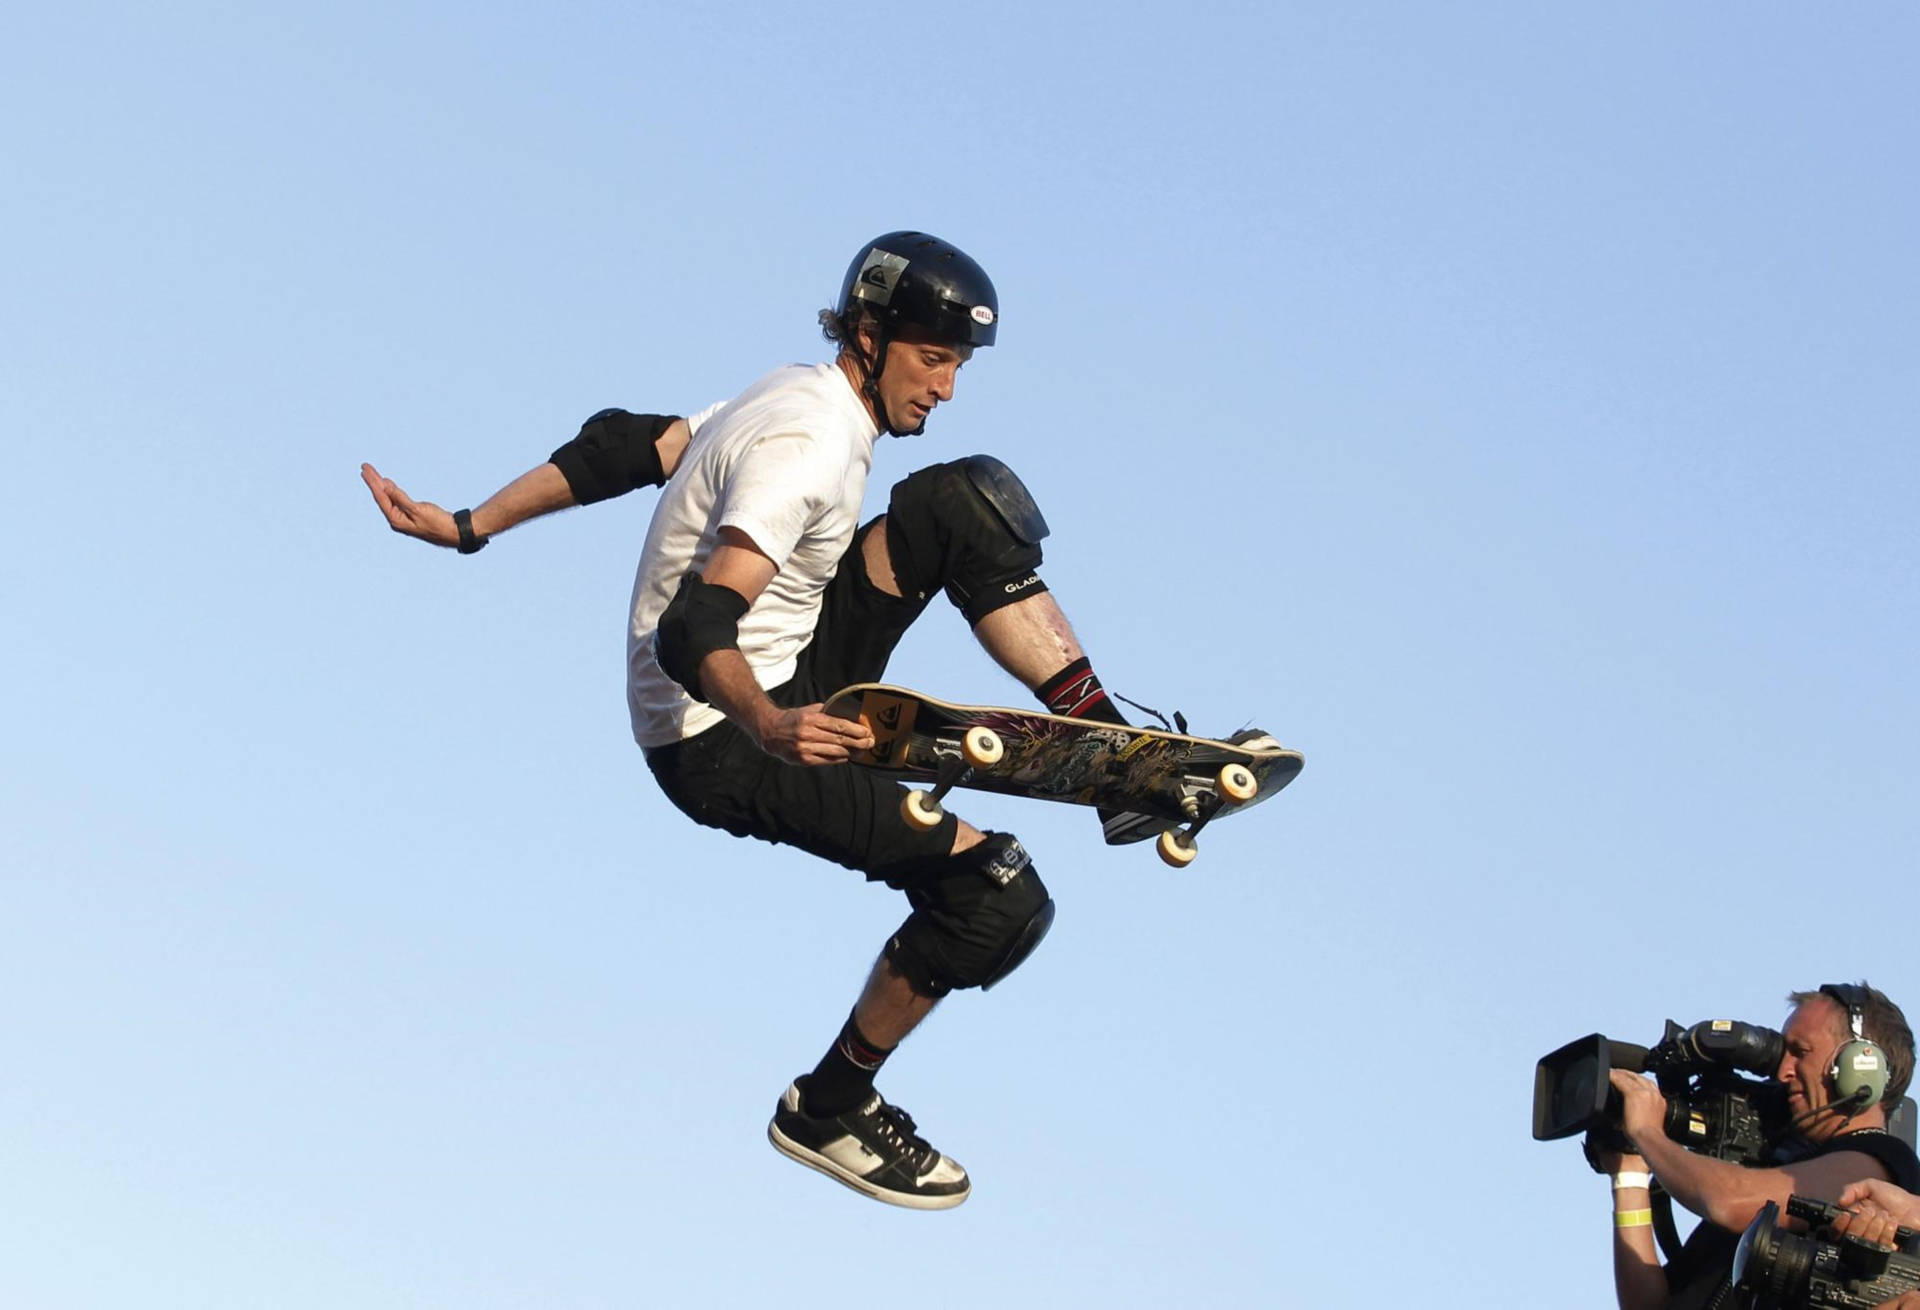 Tony Hawk Skateboarder On Cam Background